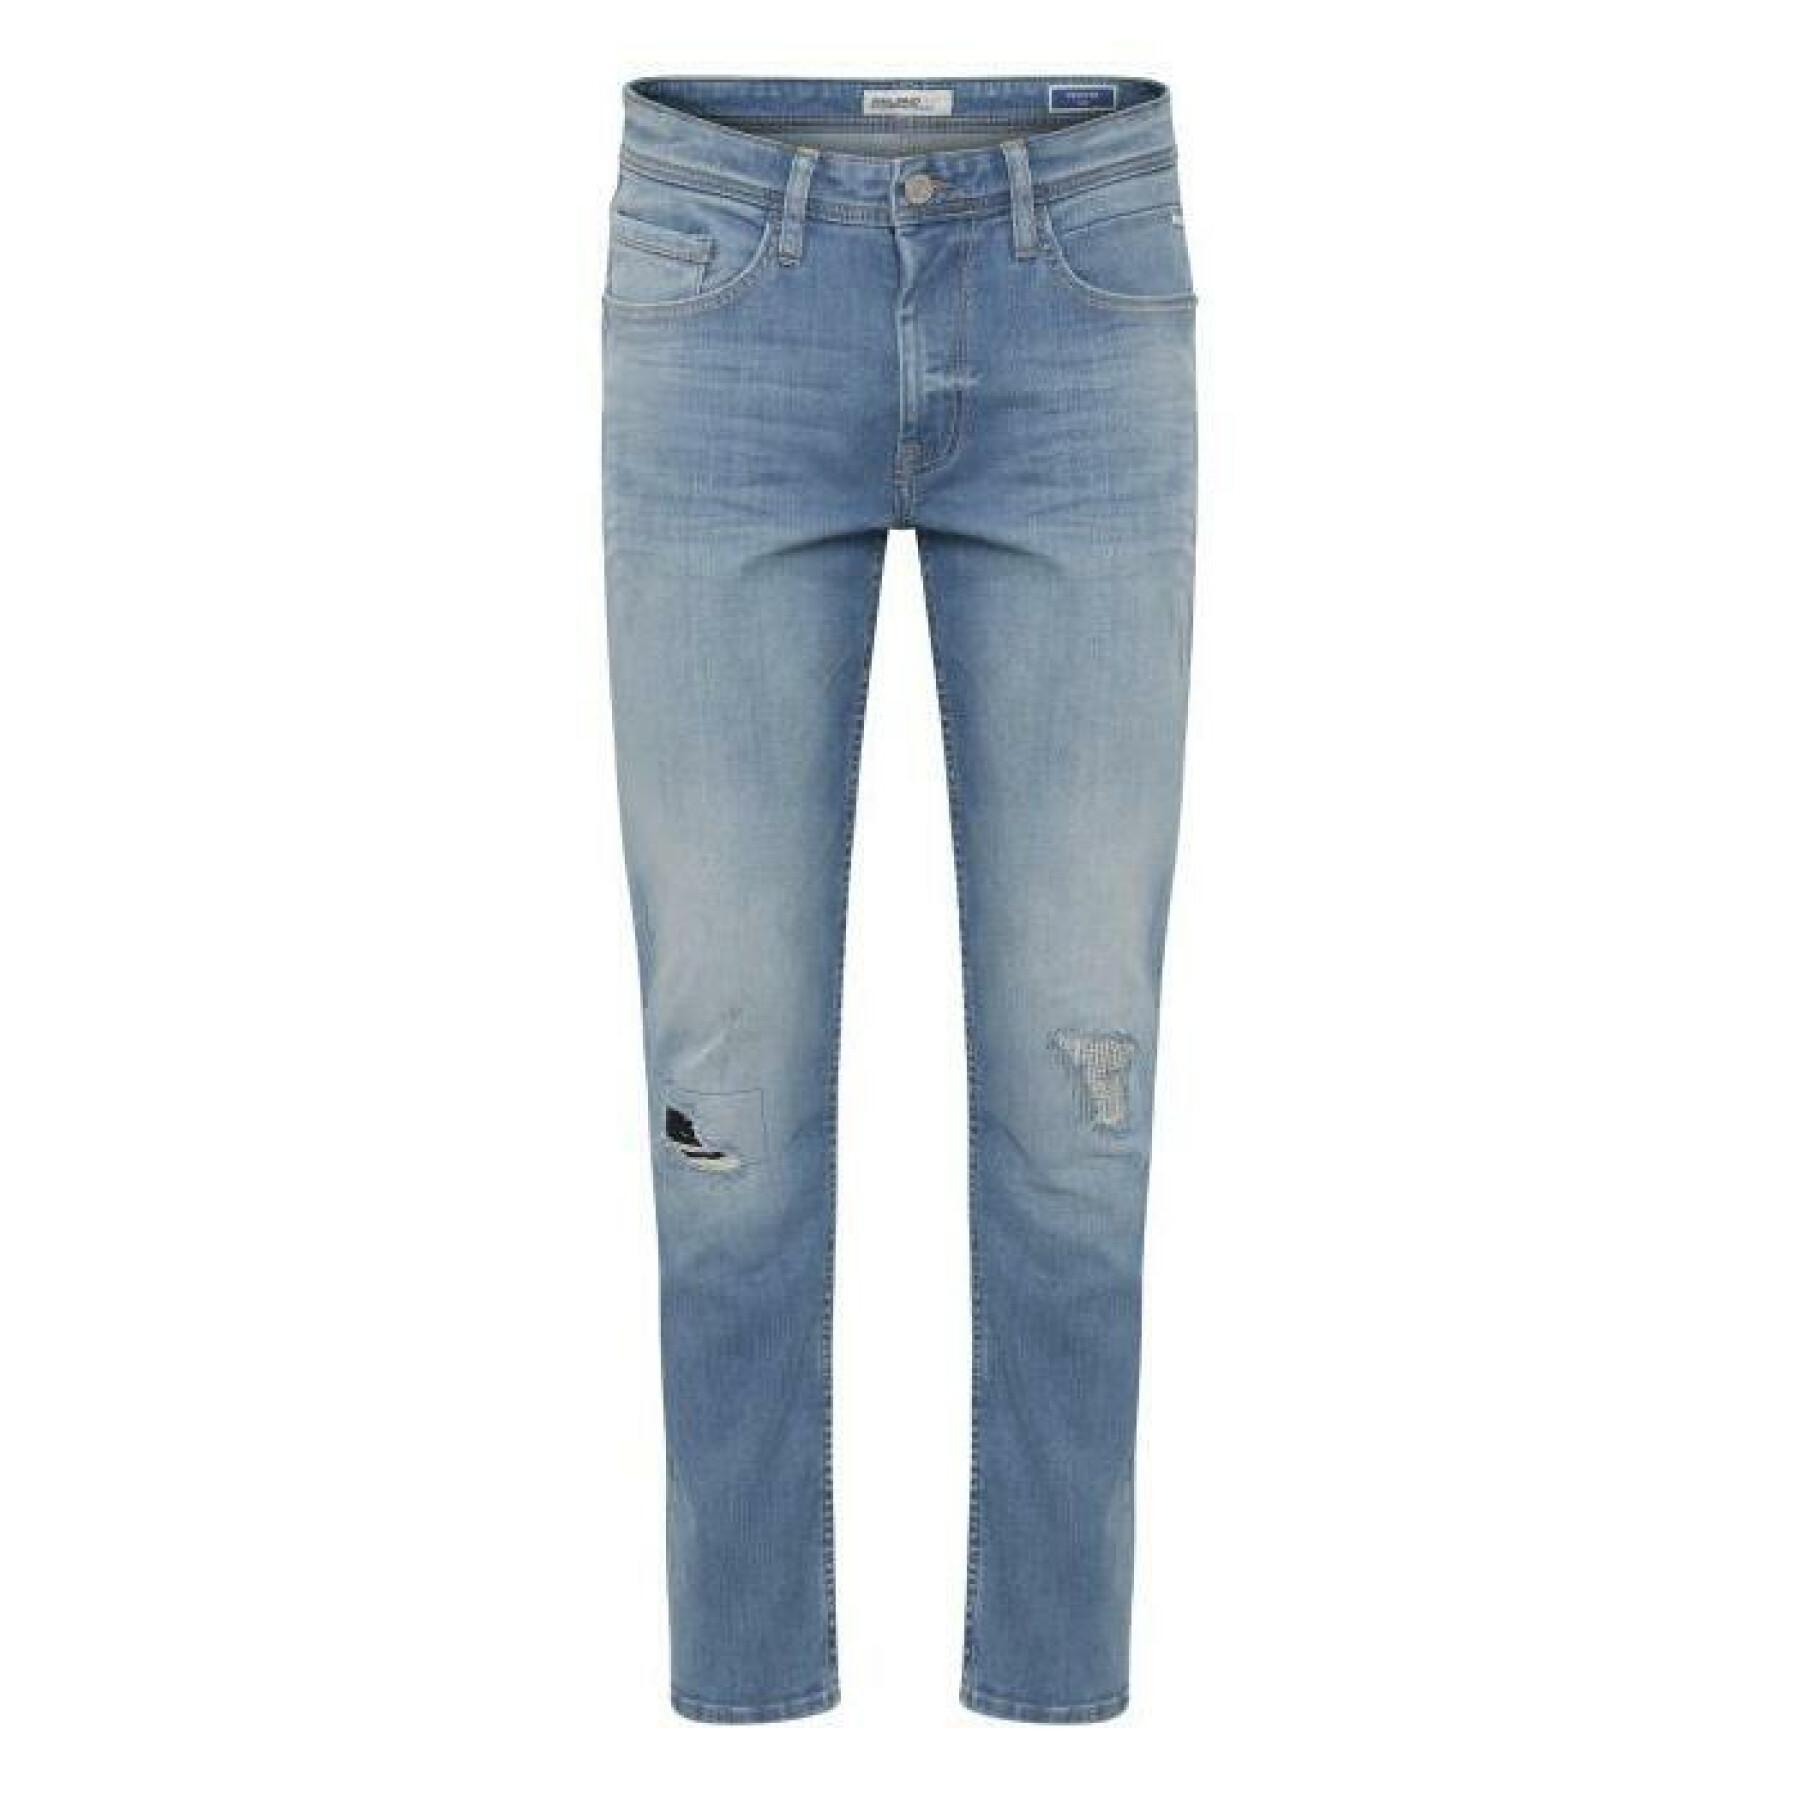 Damskie jeansy slim fit Blend Twister - Multiflex